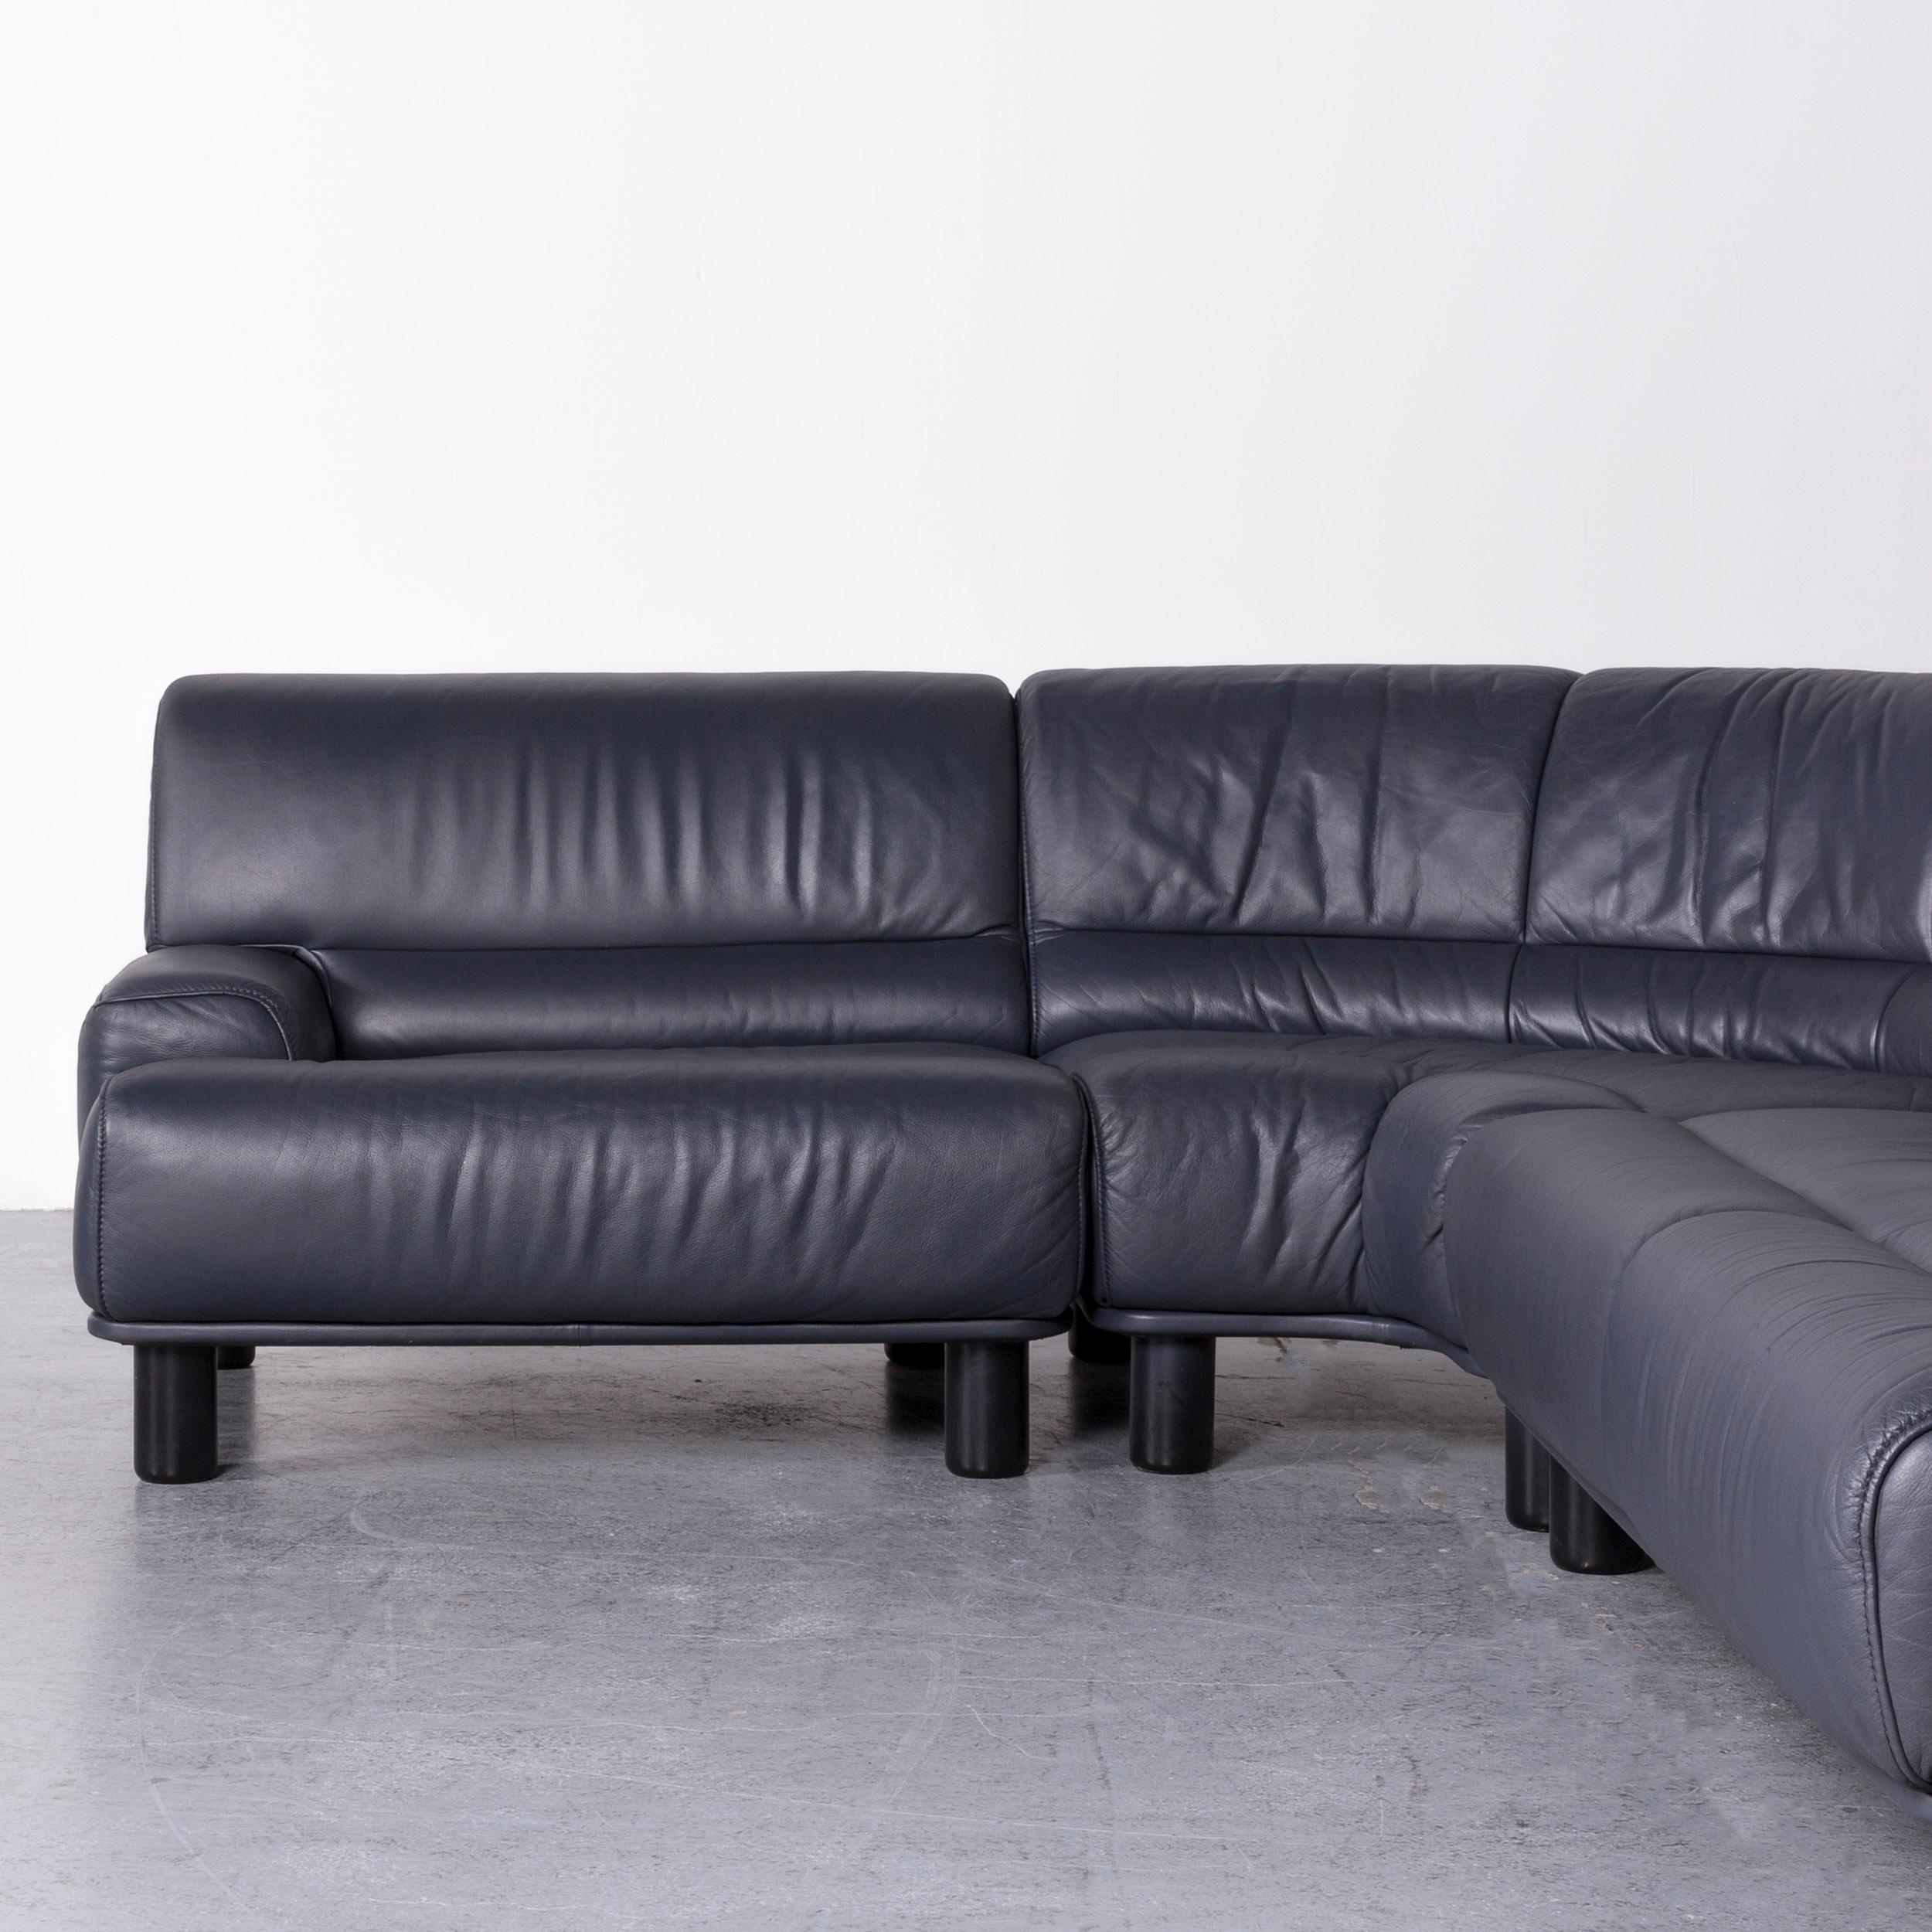 Contemporary De Sede DS 18 Designer Leather Corner Couch Armchair Set Sofa